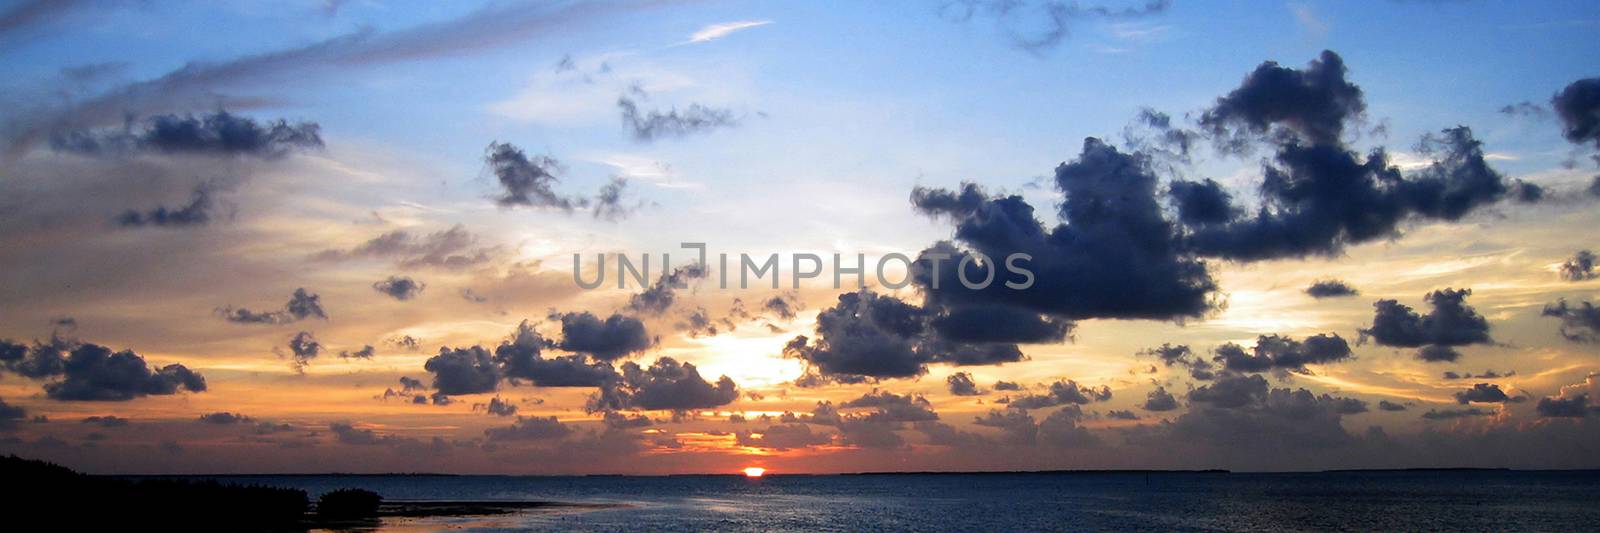 Sunset in Key West by CelsoDiniz